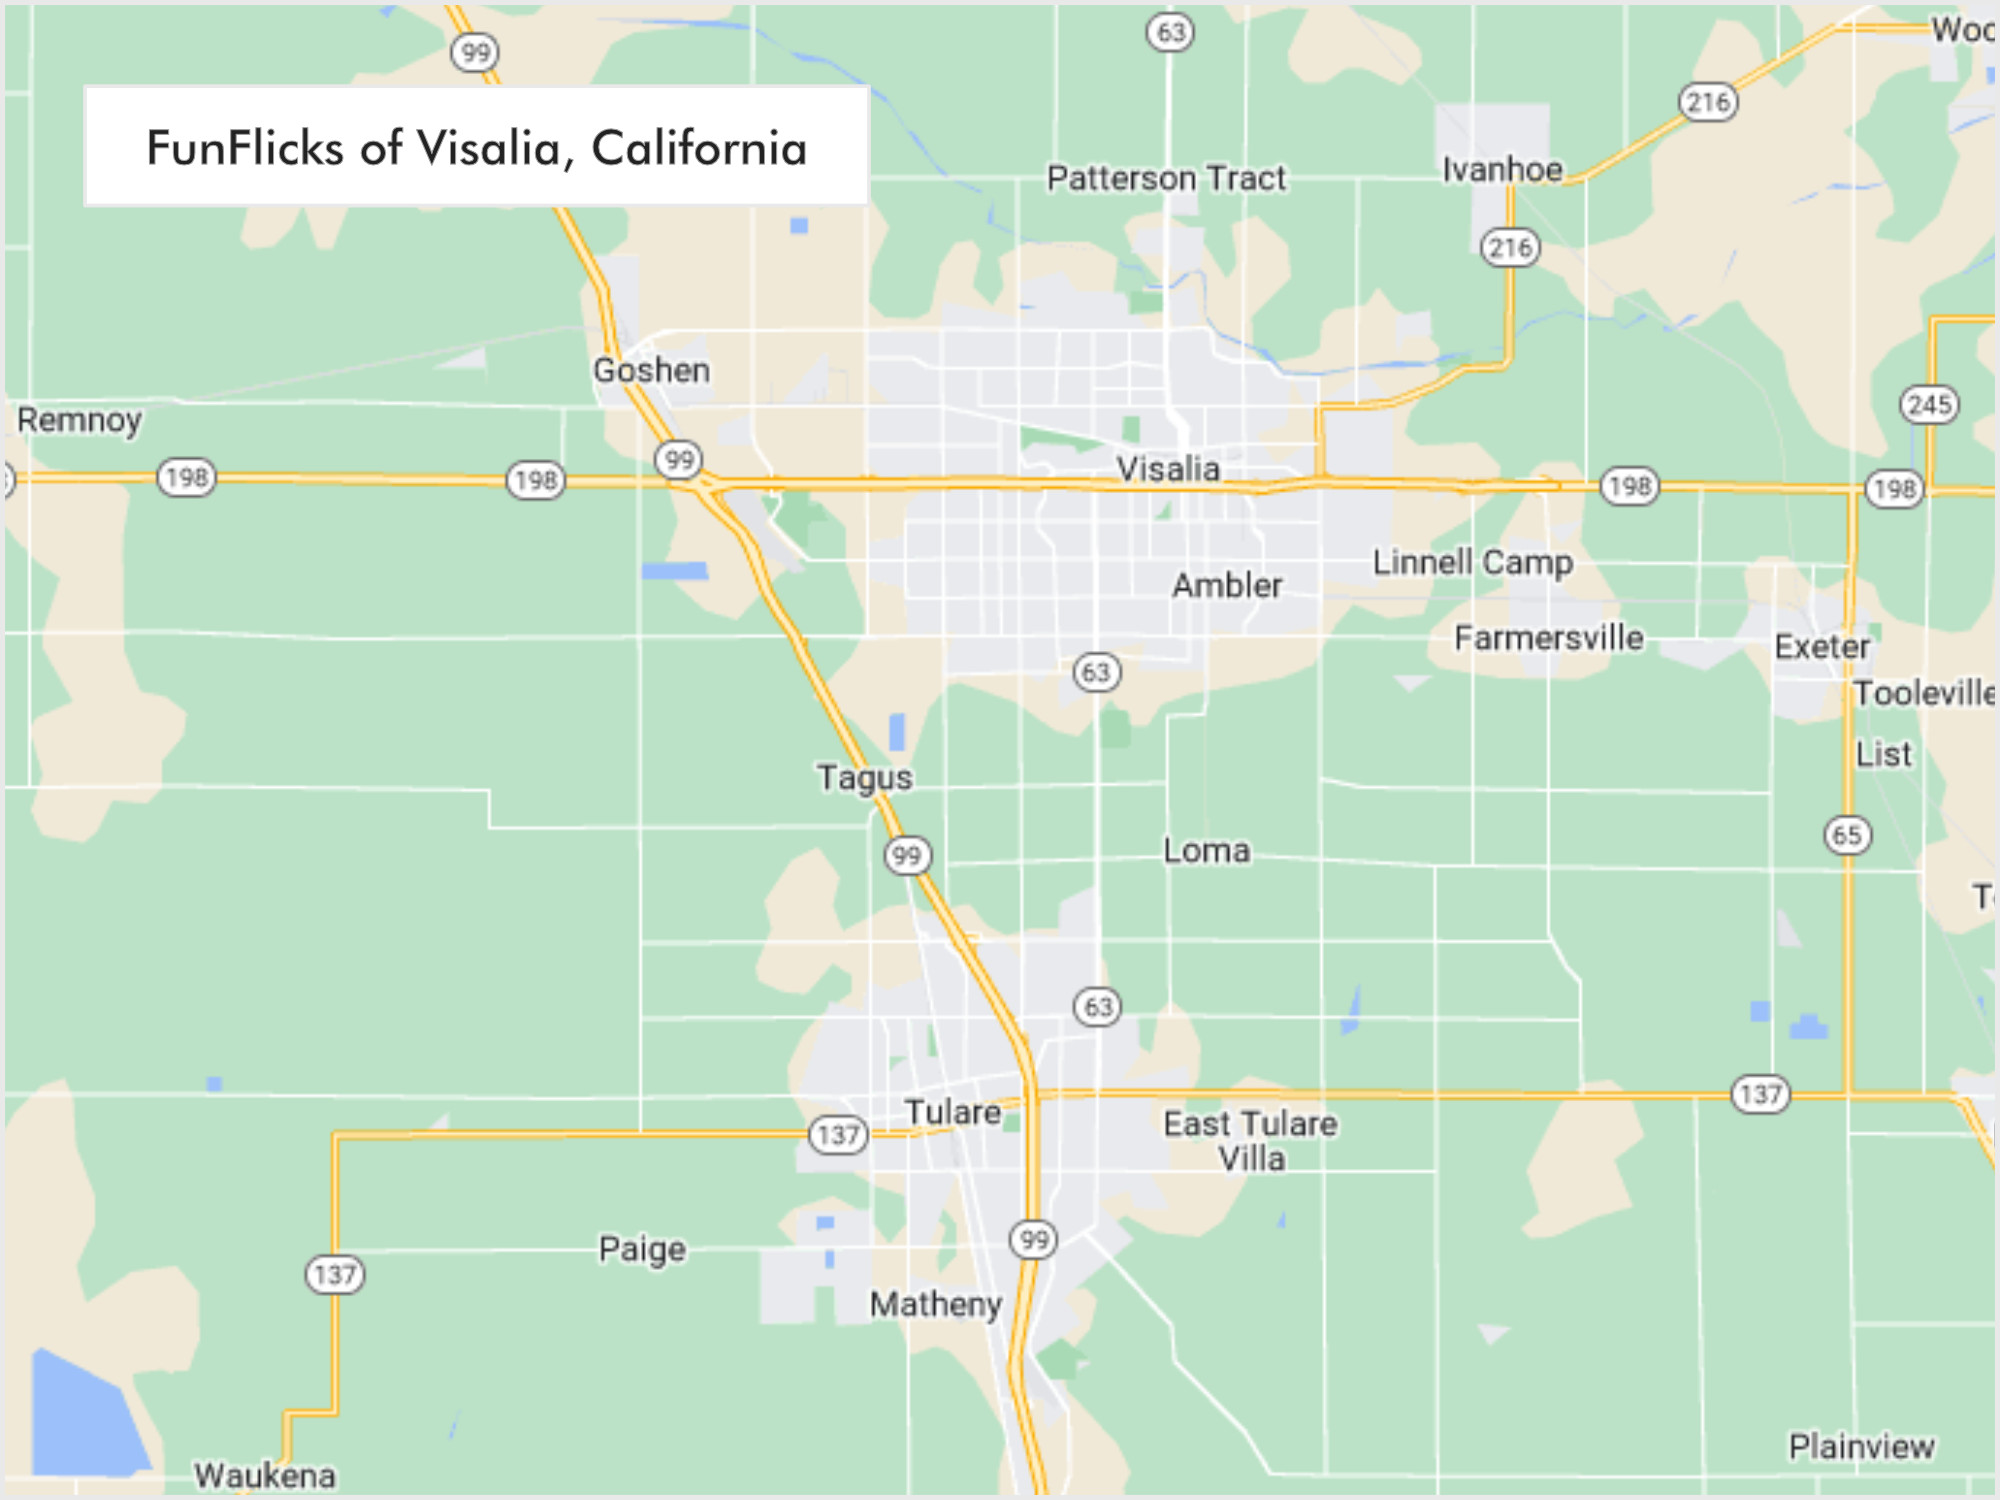 FunFlicks® Visalia territory map